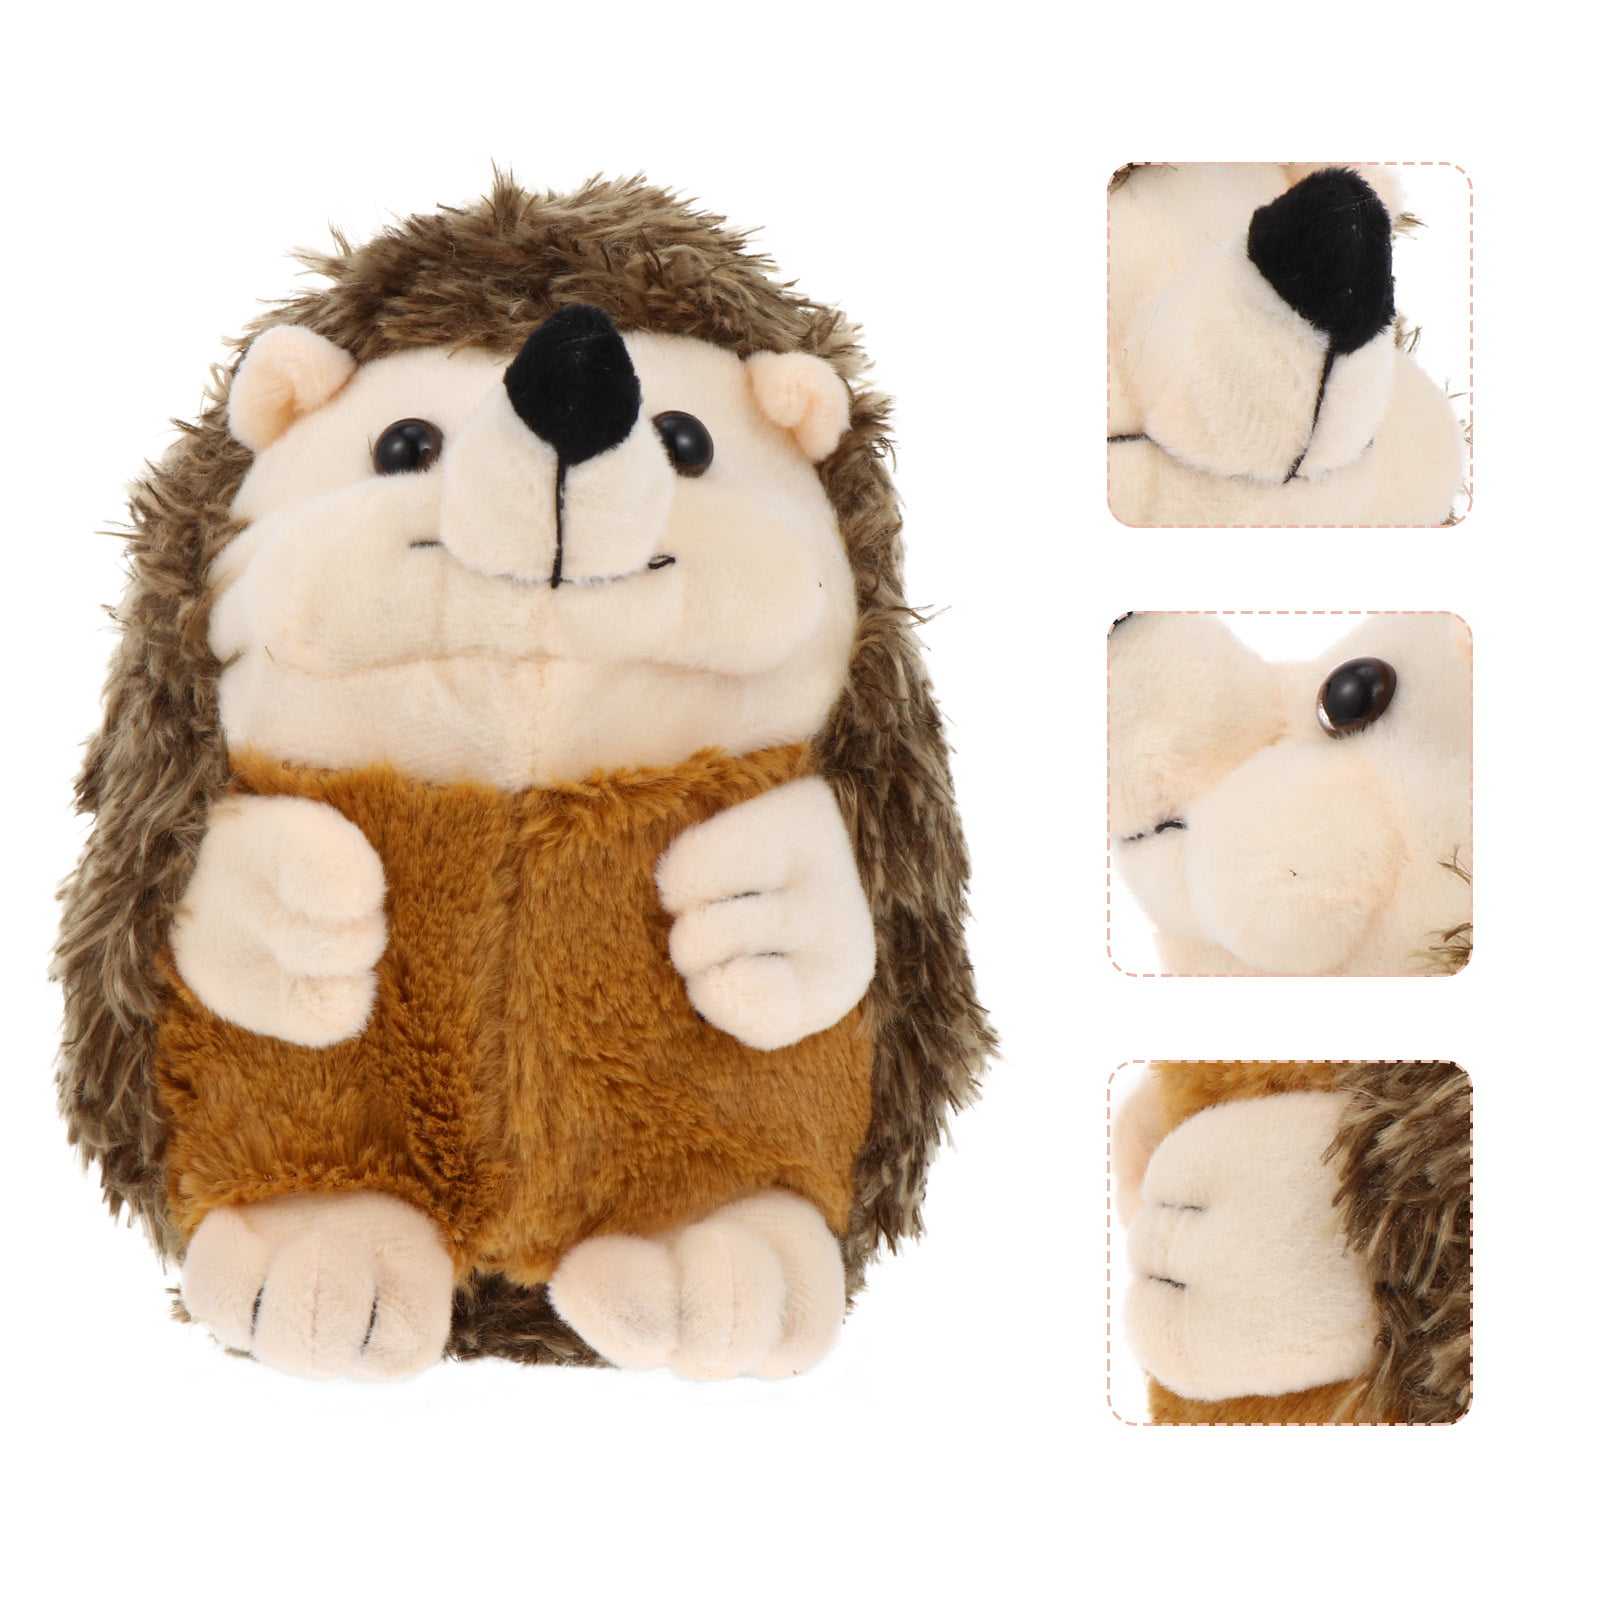 Hot Super Kawaii Hedgehog Animal Lovely Doll Stuffed Plush Toy Child Kids Gift 